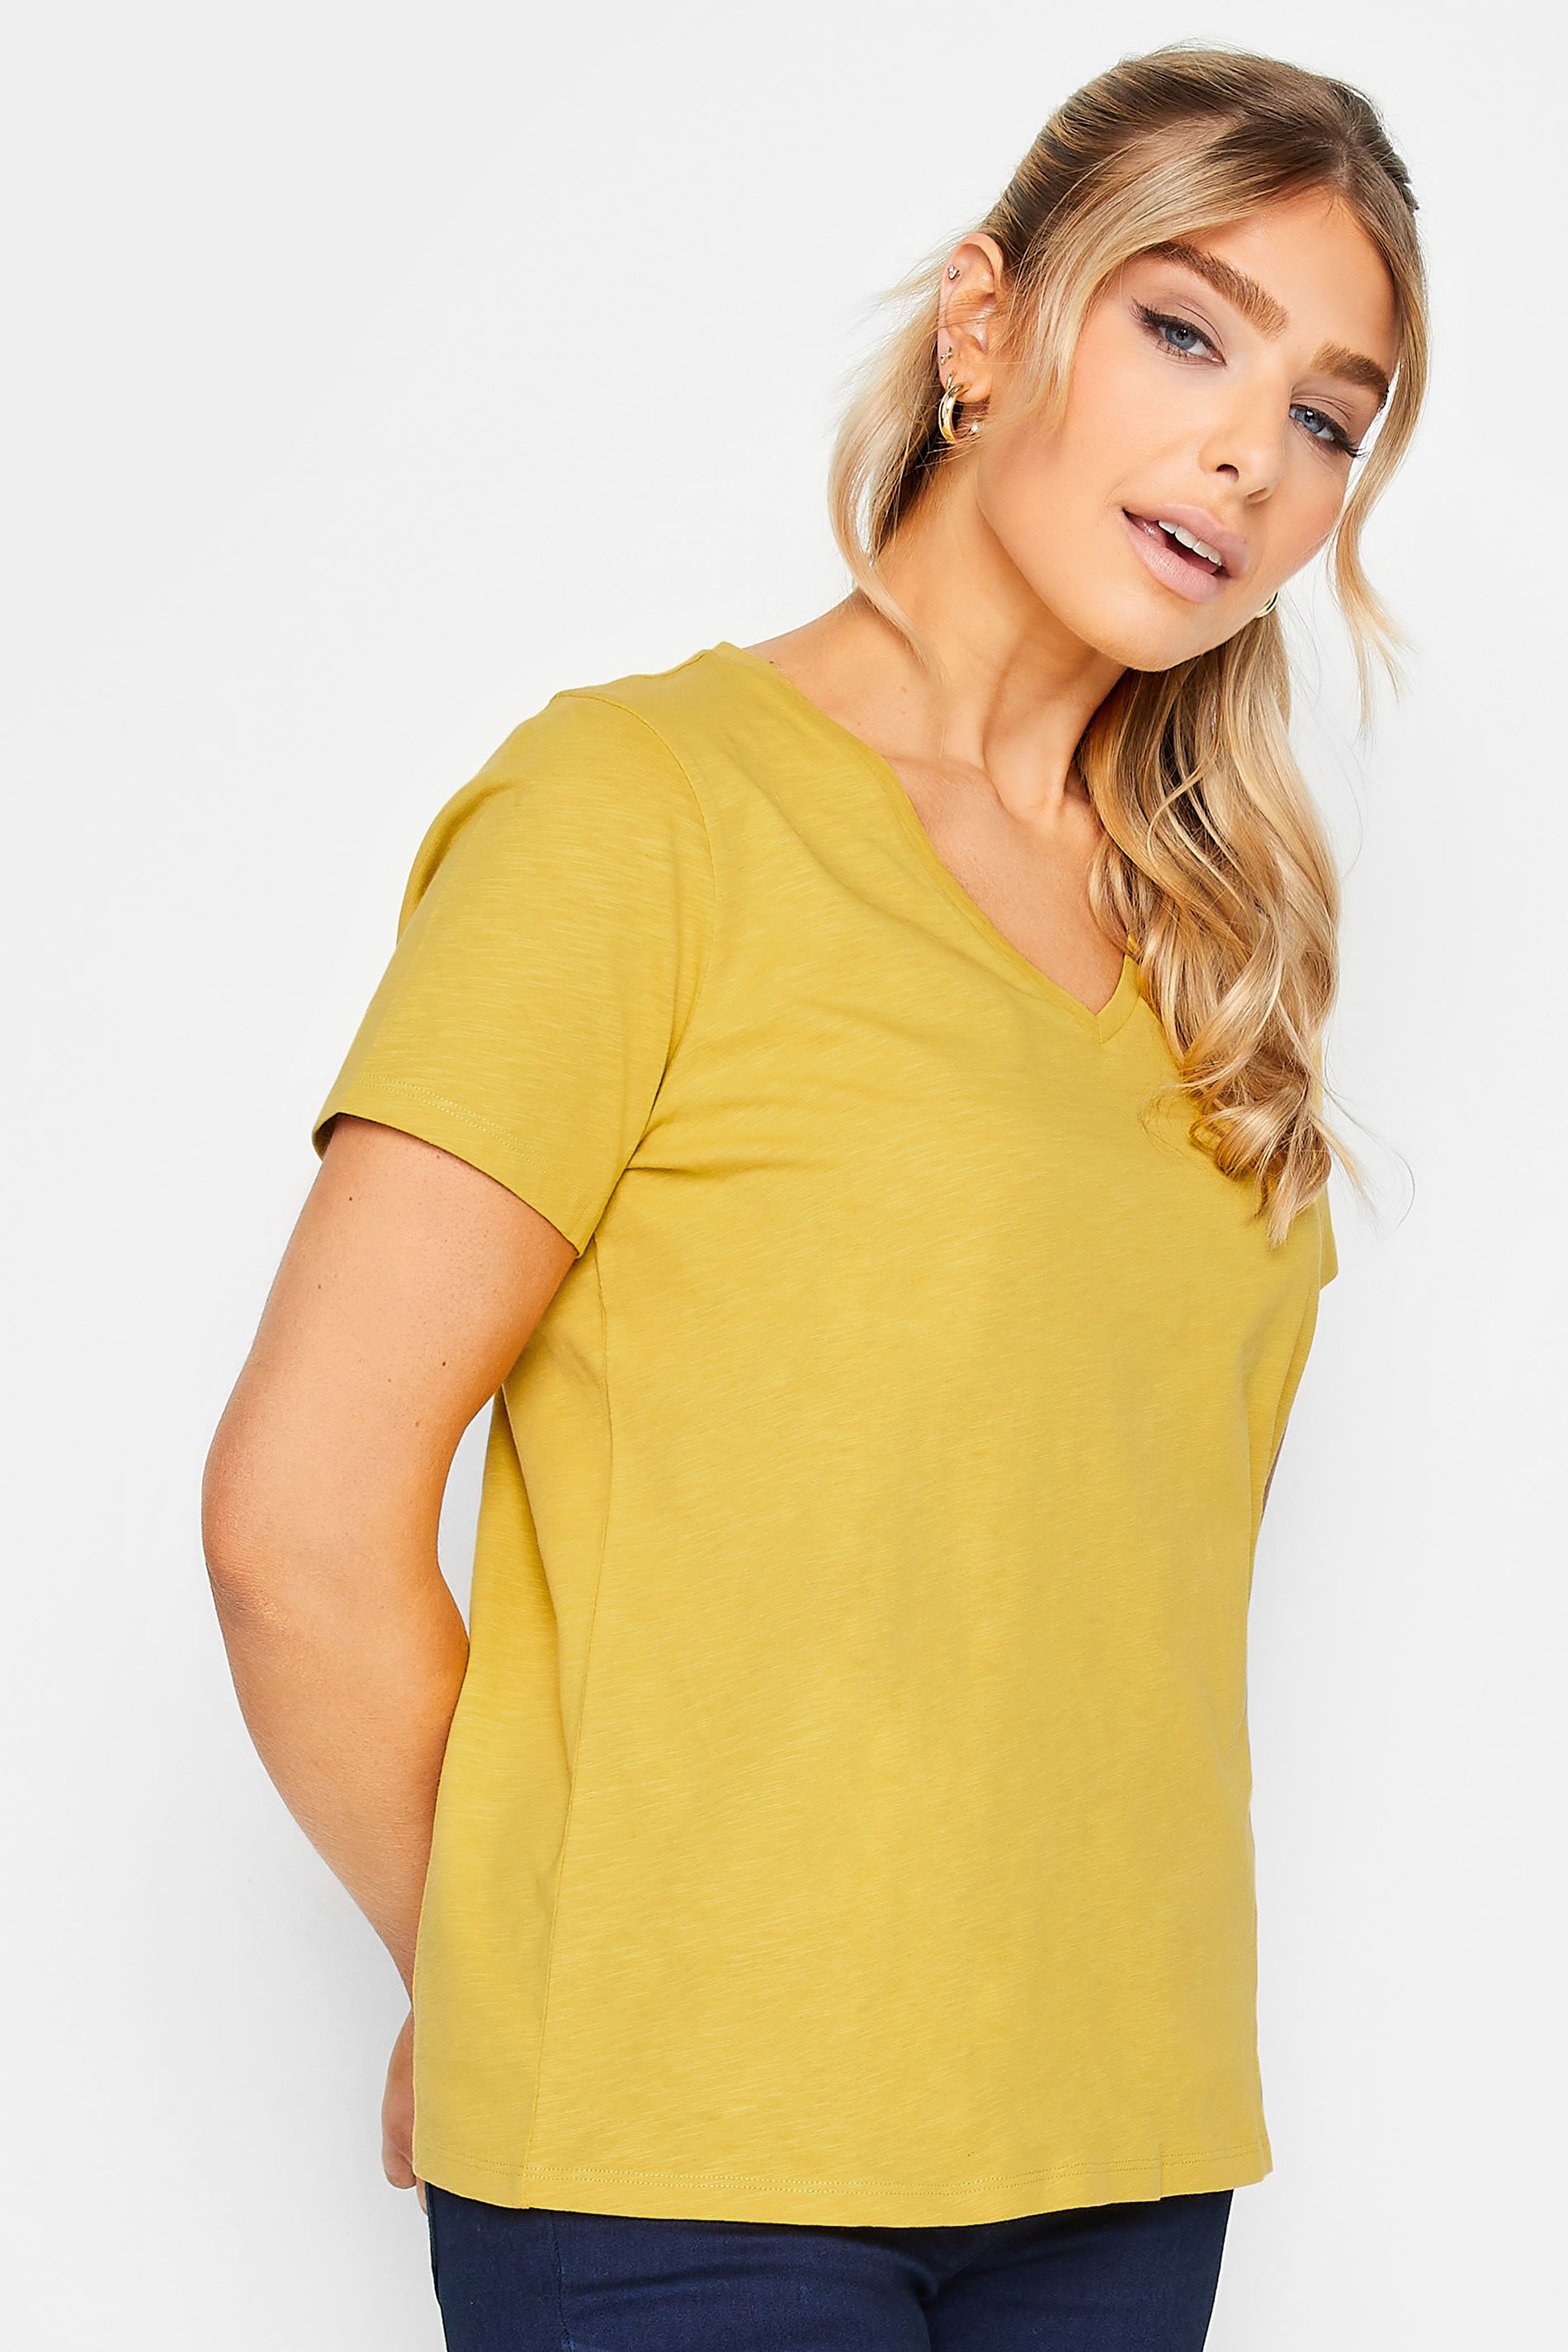 M&Co Yellow V-Neck Cotton T-Shirt | M&Co 1